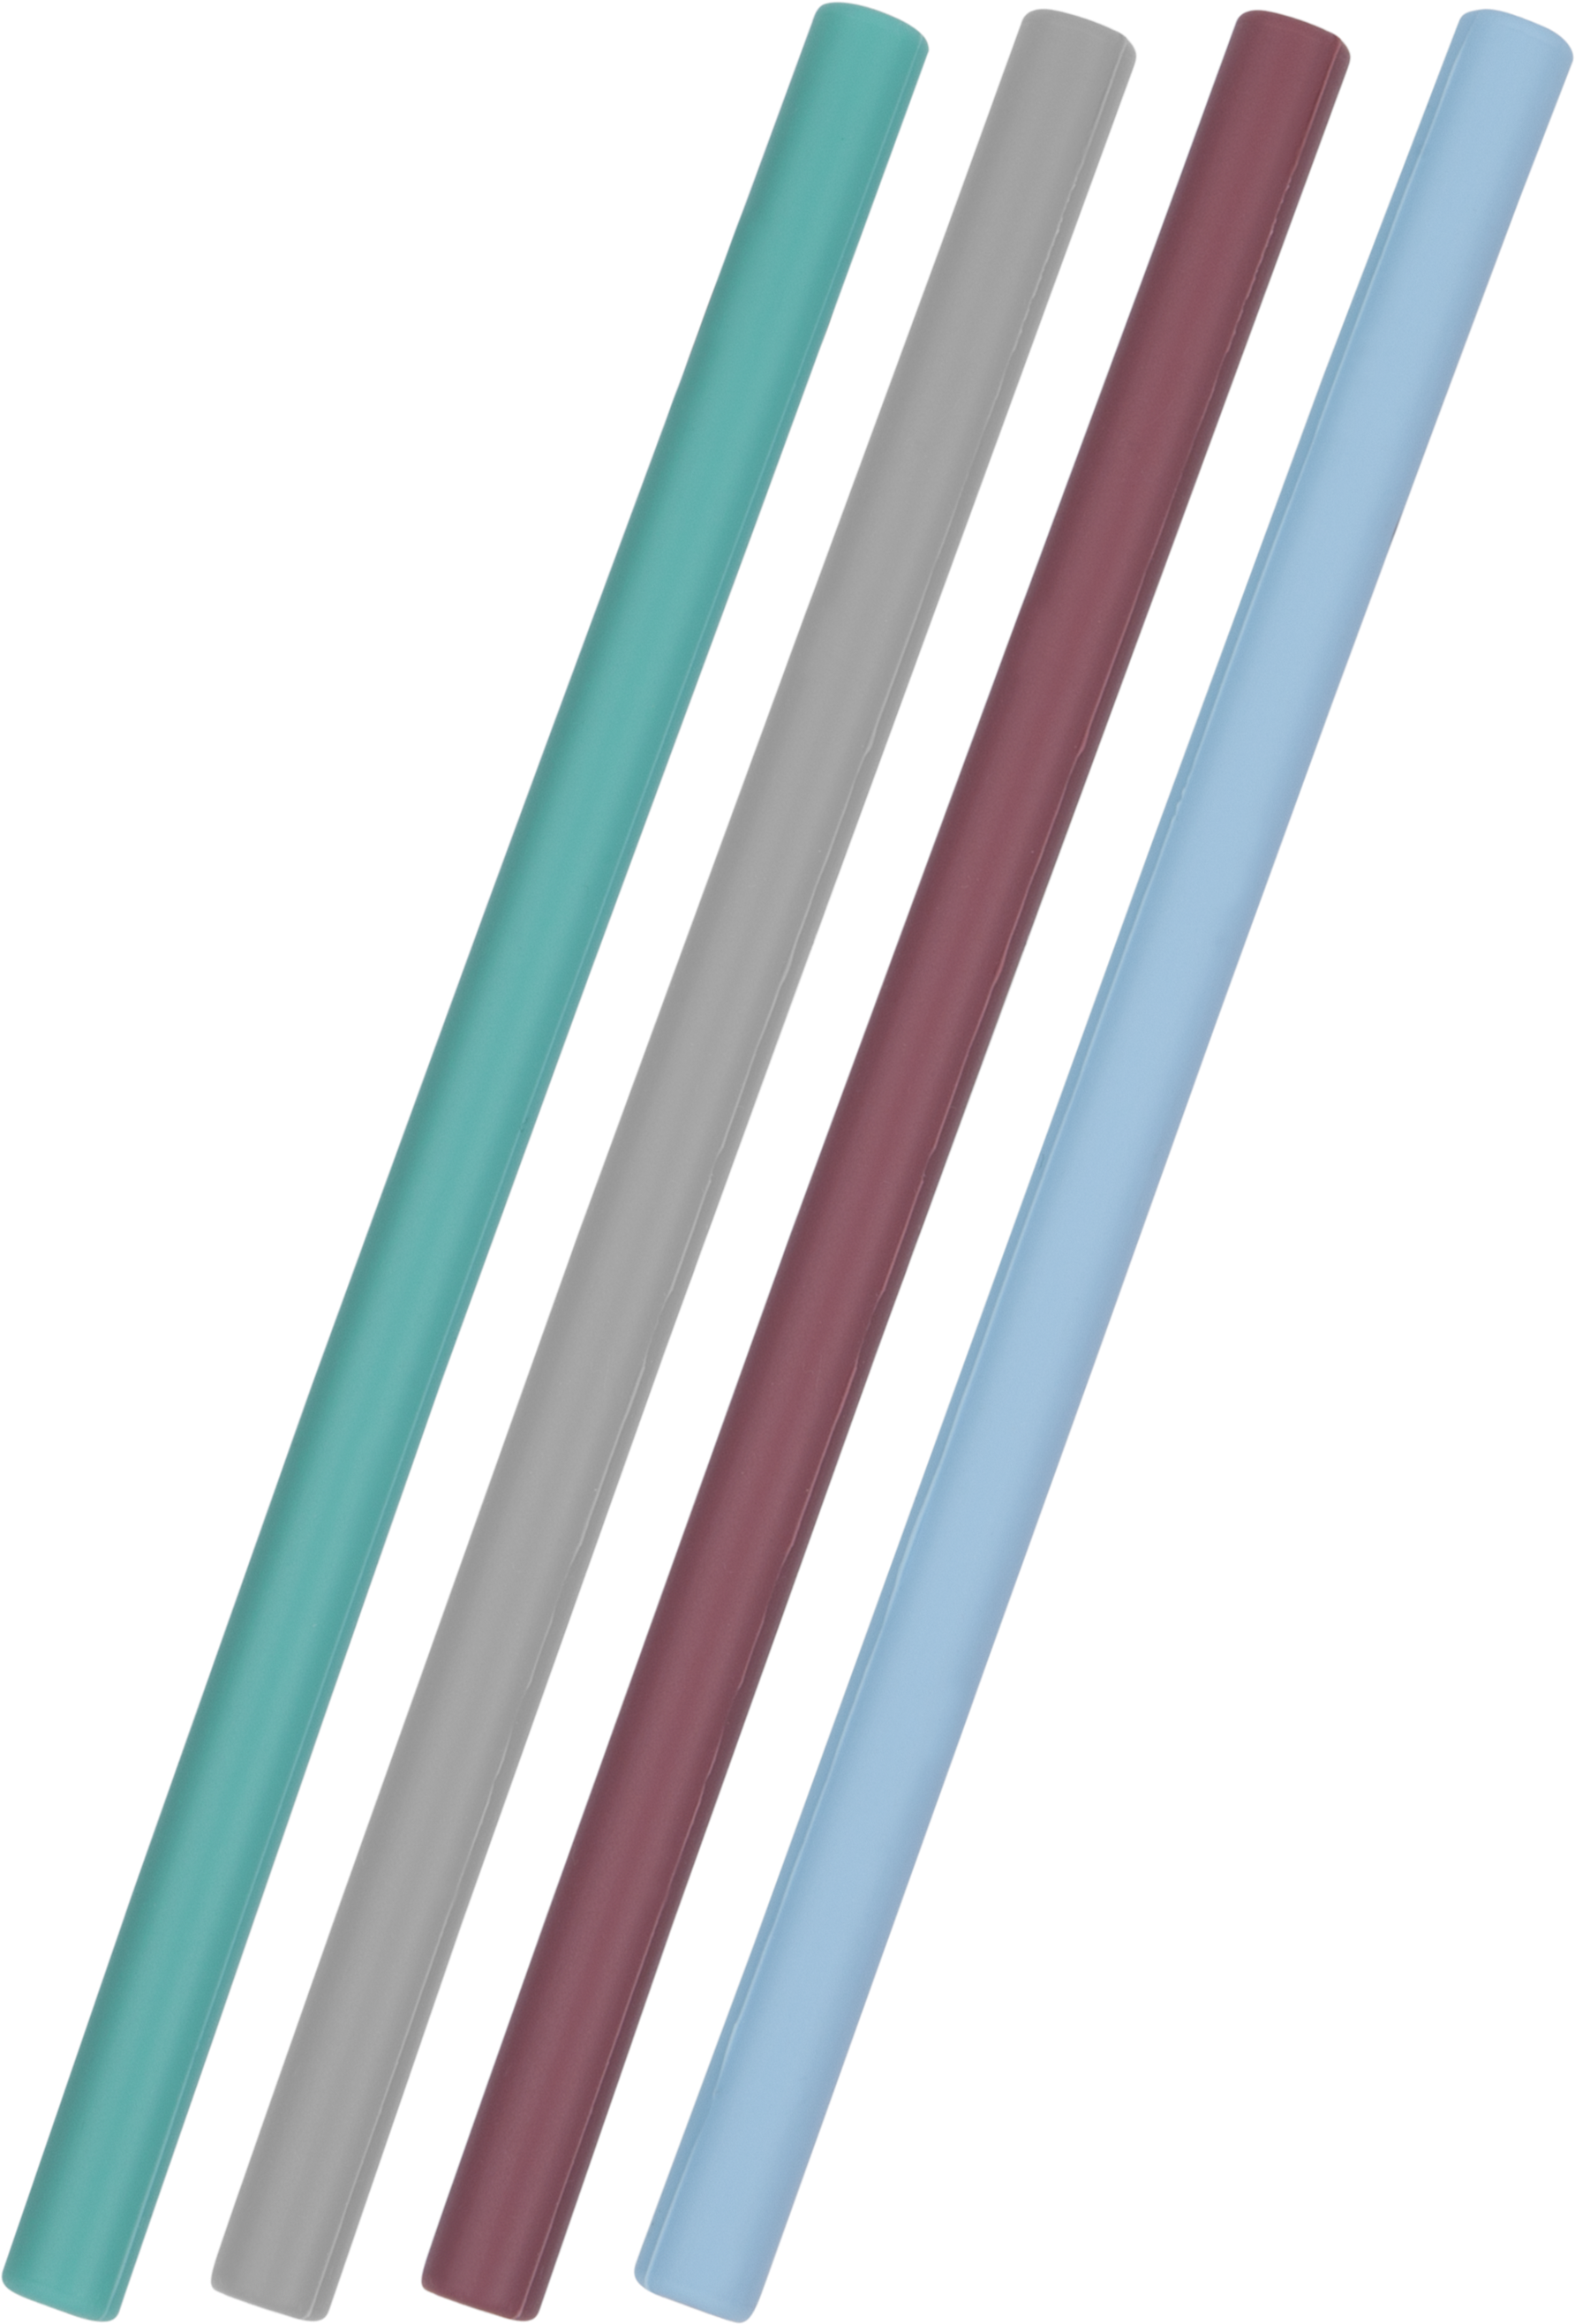 Colorful Plastic Straws